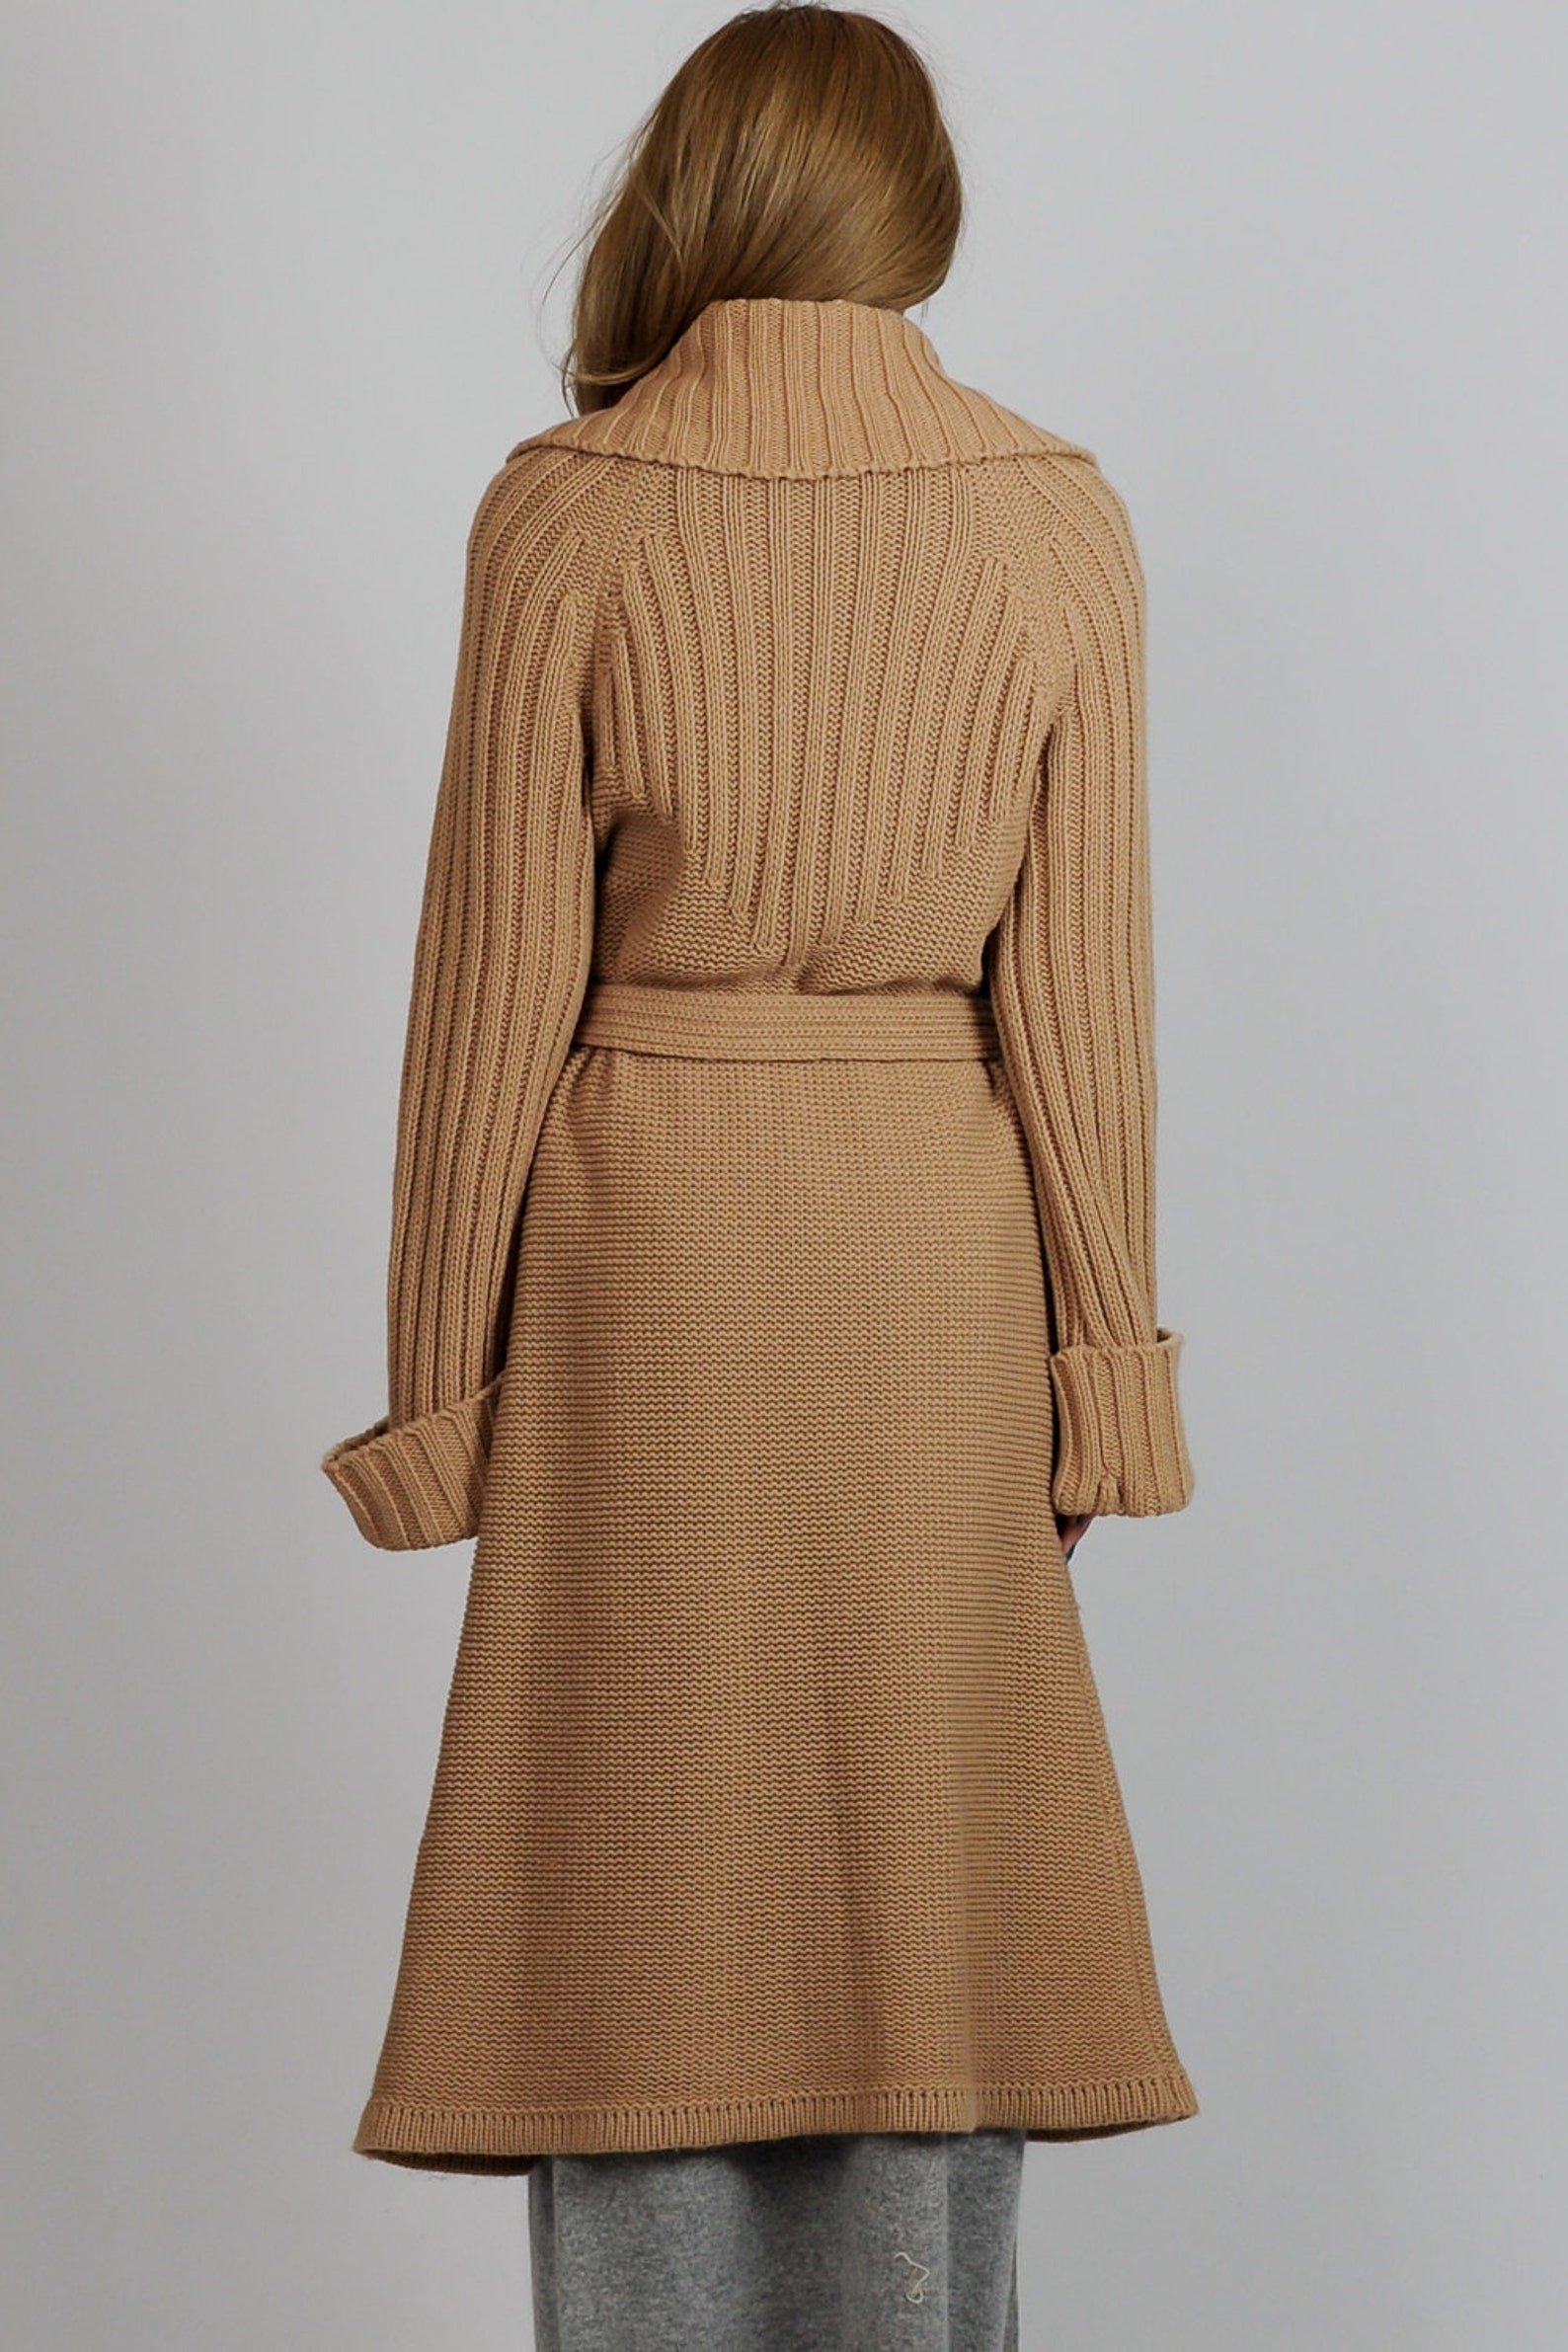 Vintage 70s camel BELTED Cardigan Sweater Coat bell sleeve | Etsy